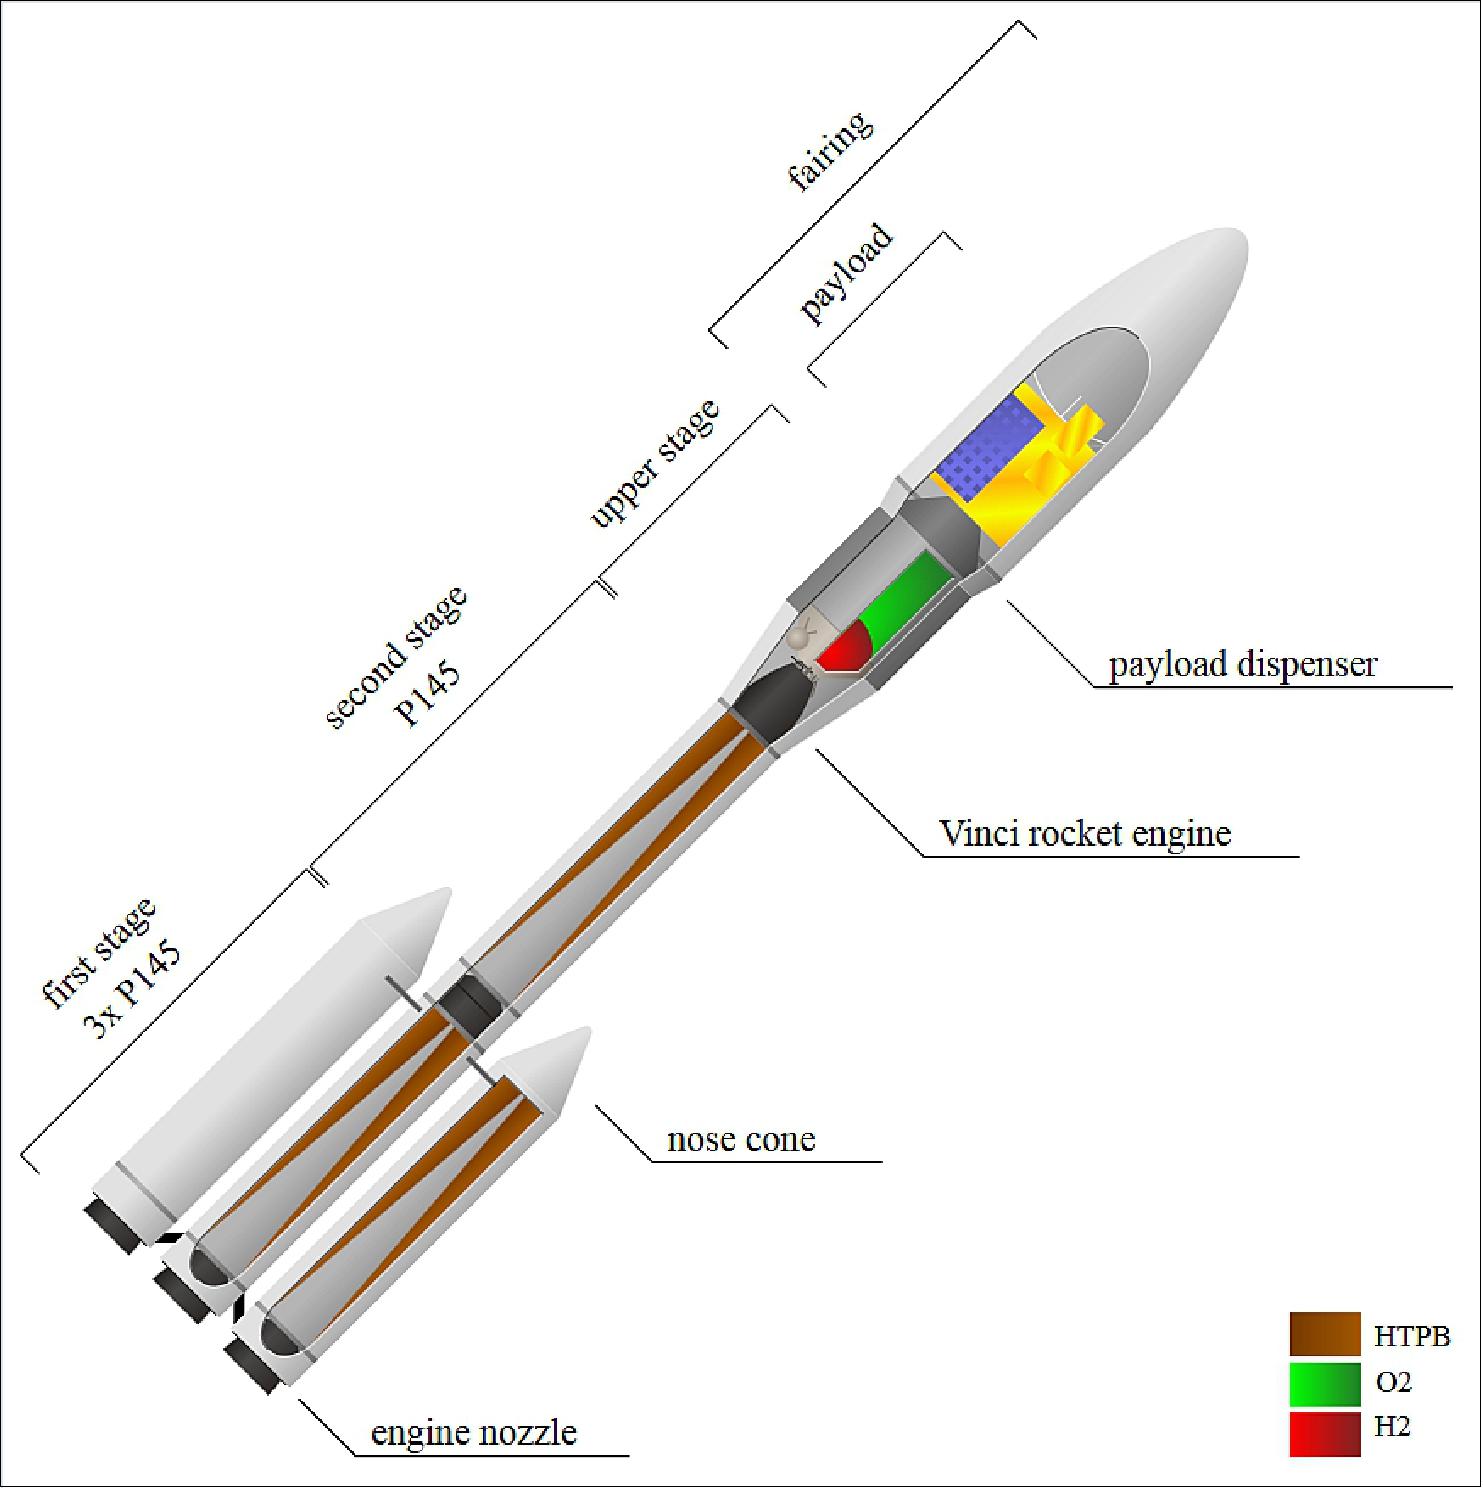 Figure 2: Ariane 6 PPH cutaway drawing (image credit: Wikipedia, SkywalkerPL)